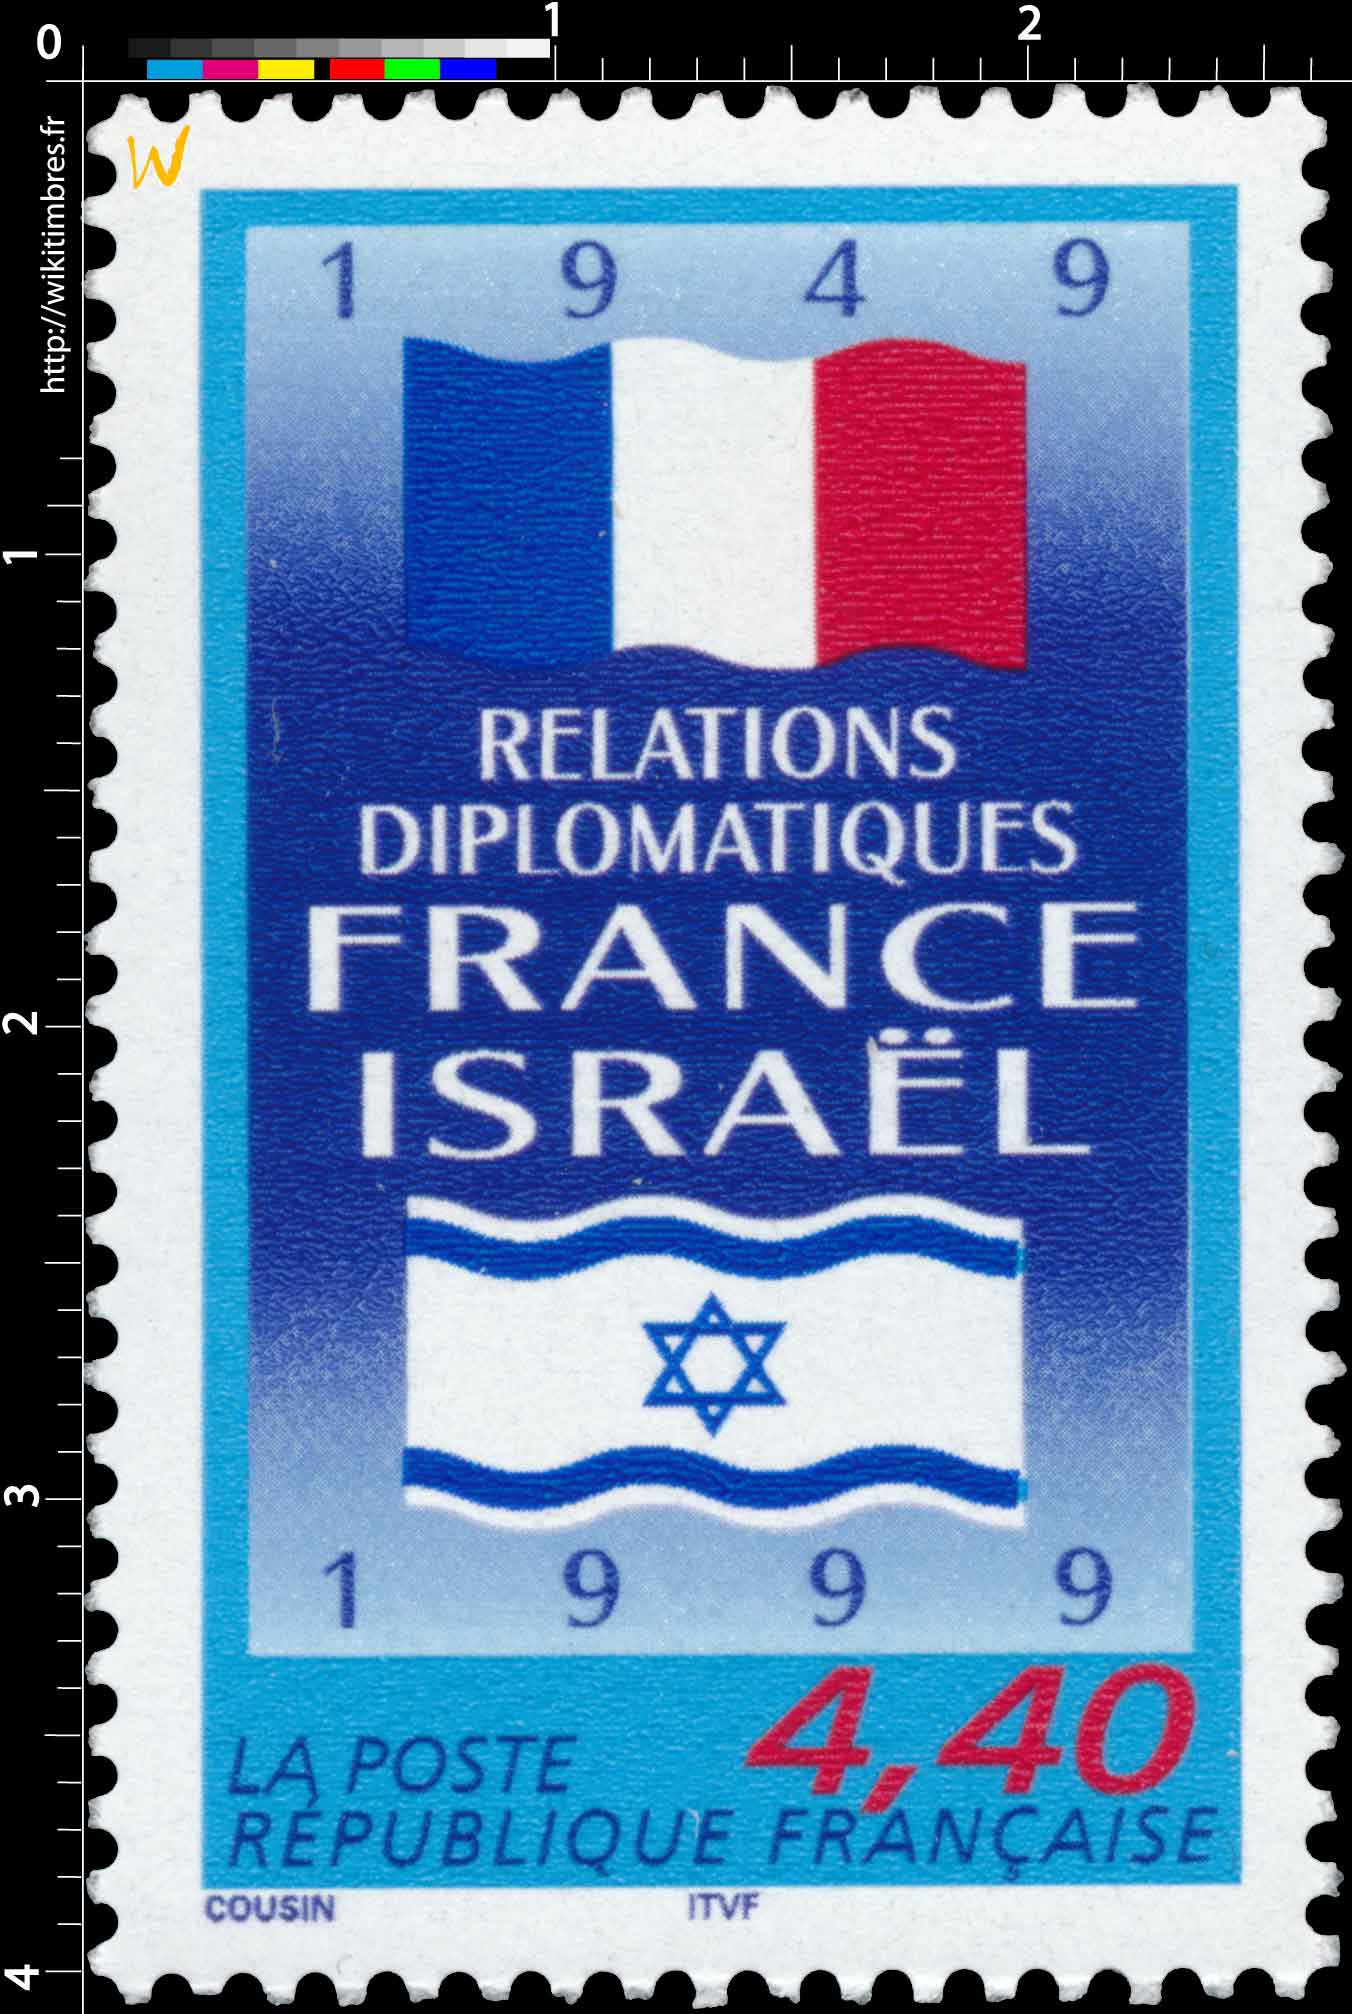 RELATIONS DIPLOMATIQUES FRANCE ISRAËL 1949-1999